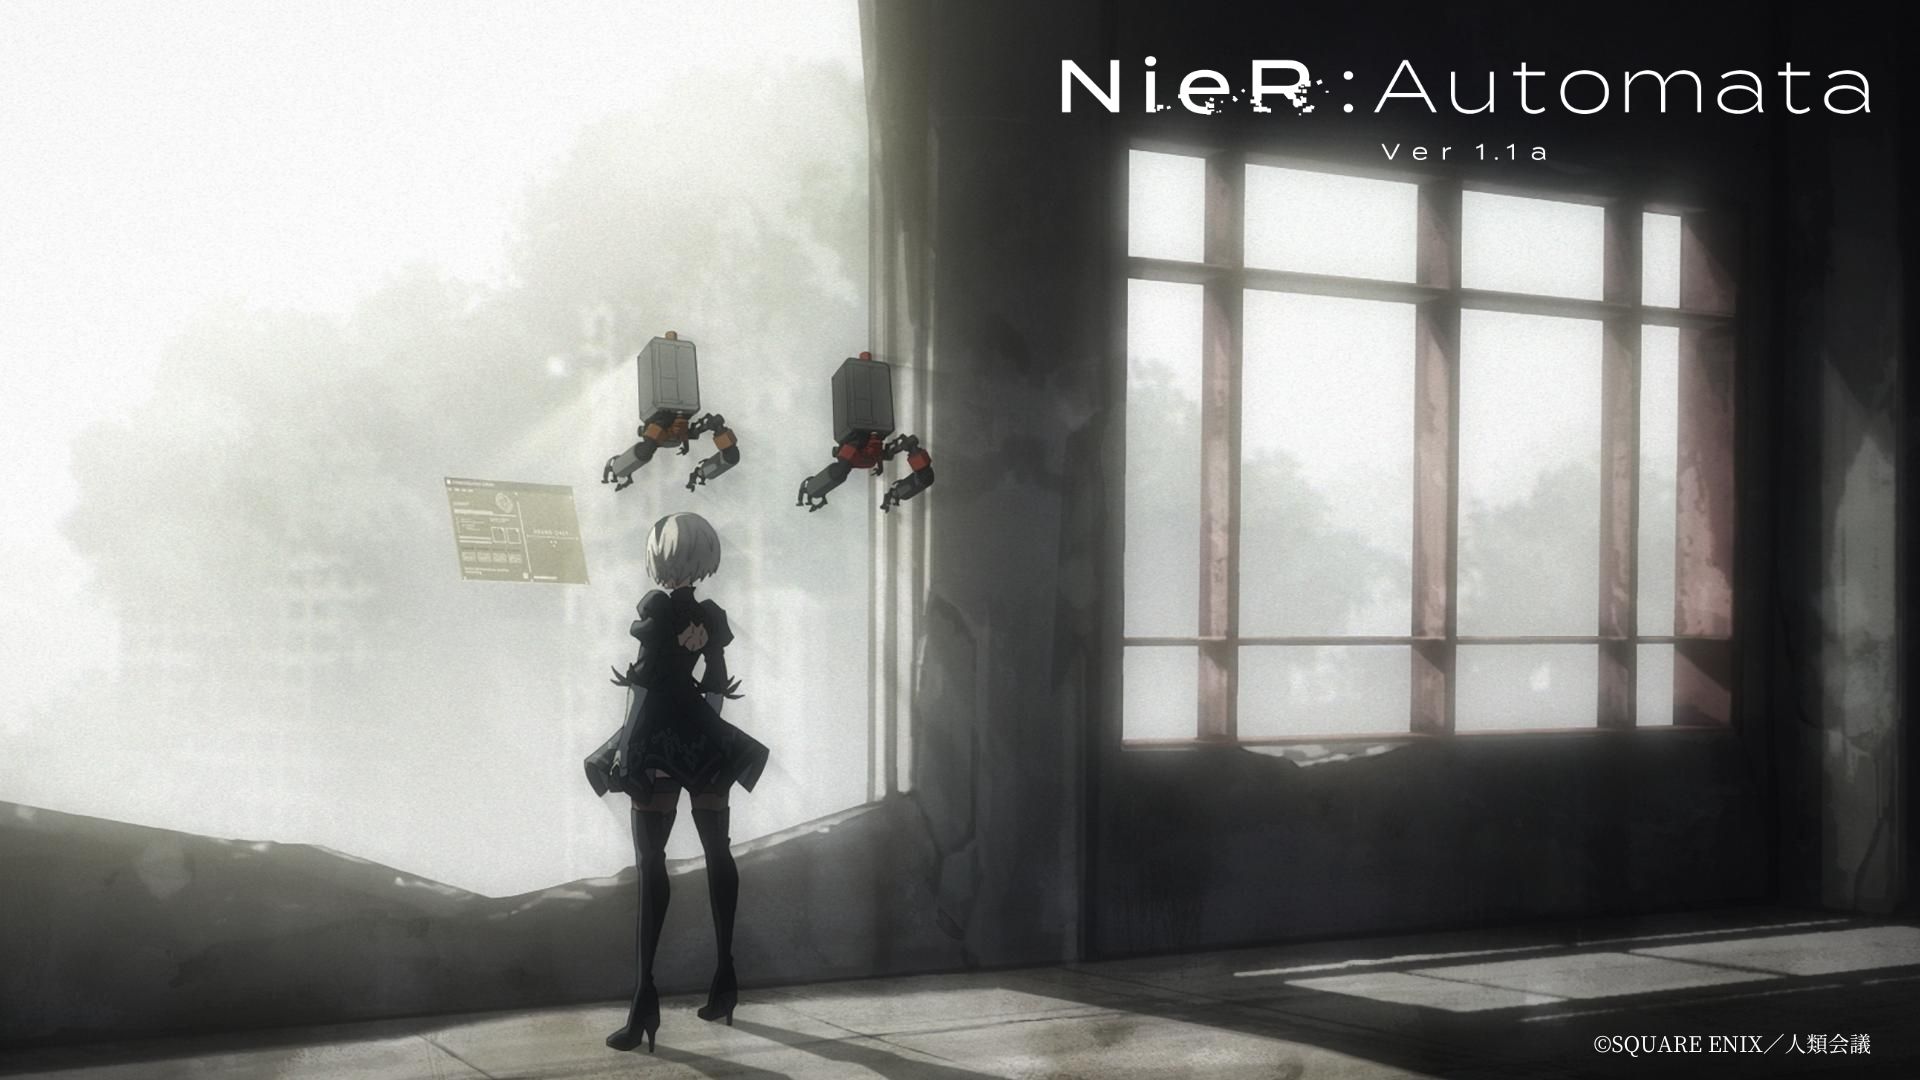 Anime NieR:Automata Ver 1.1a HD Wallpaper